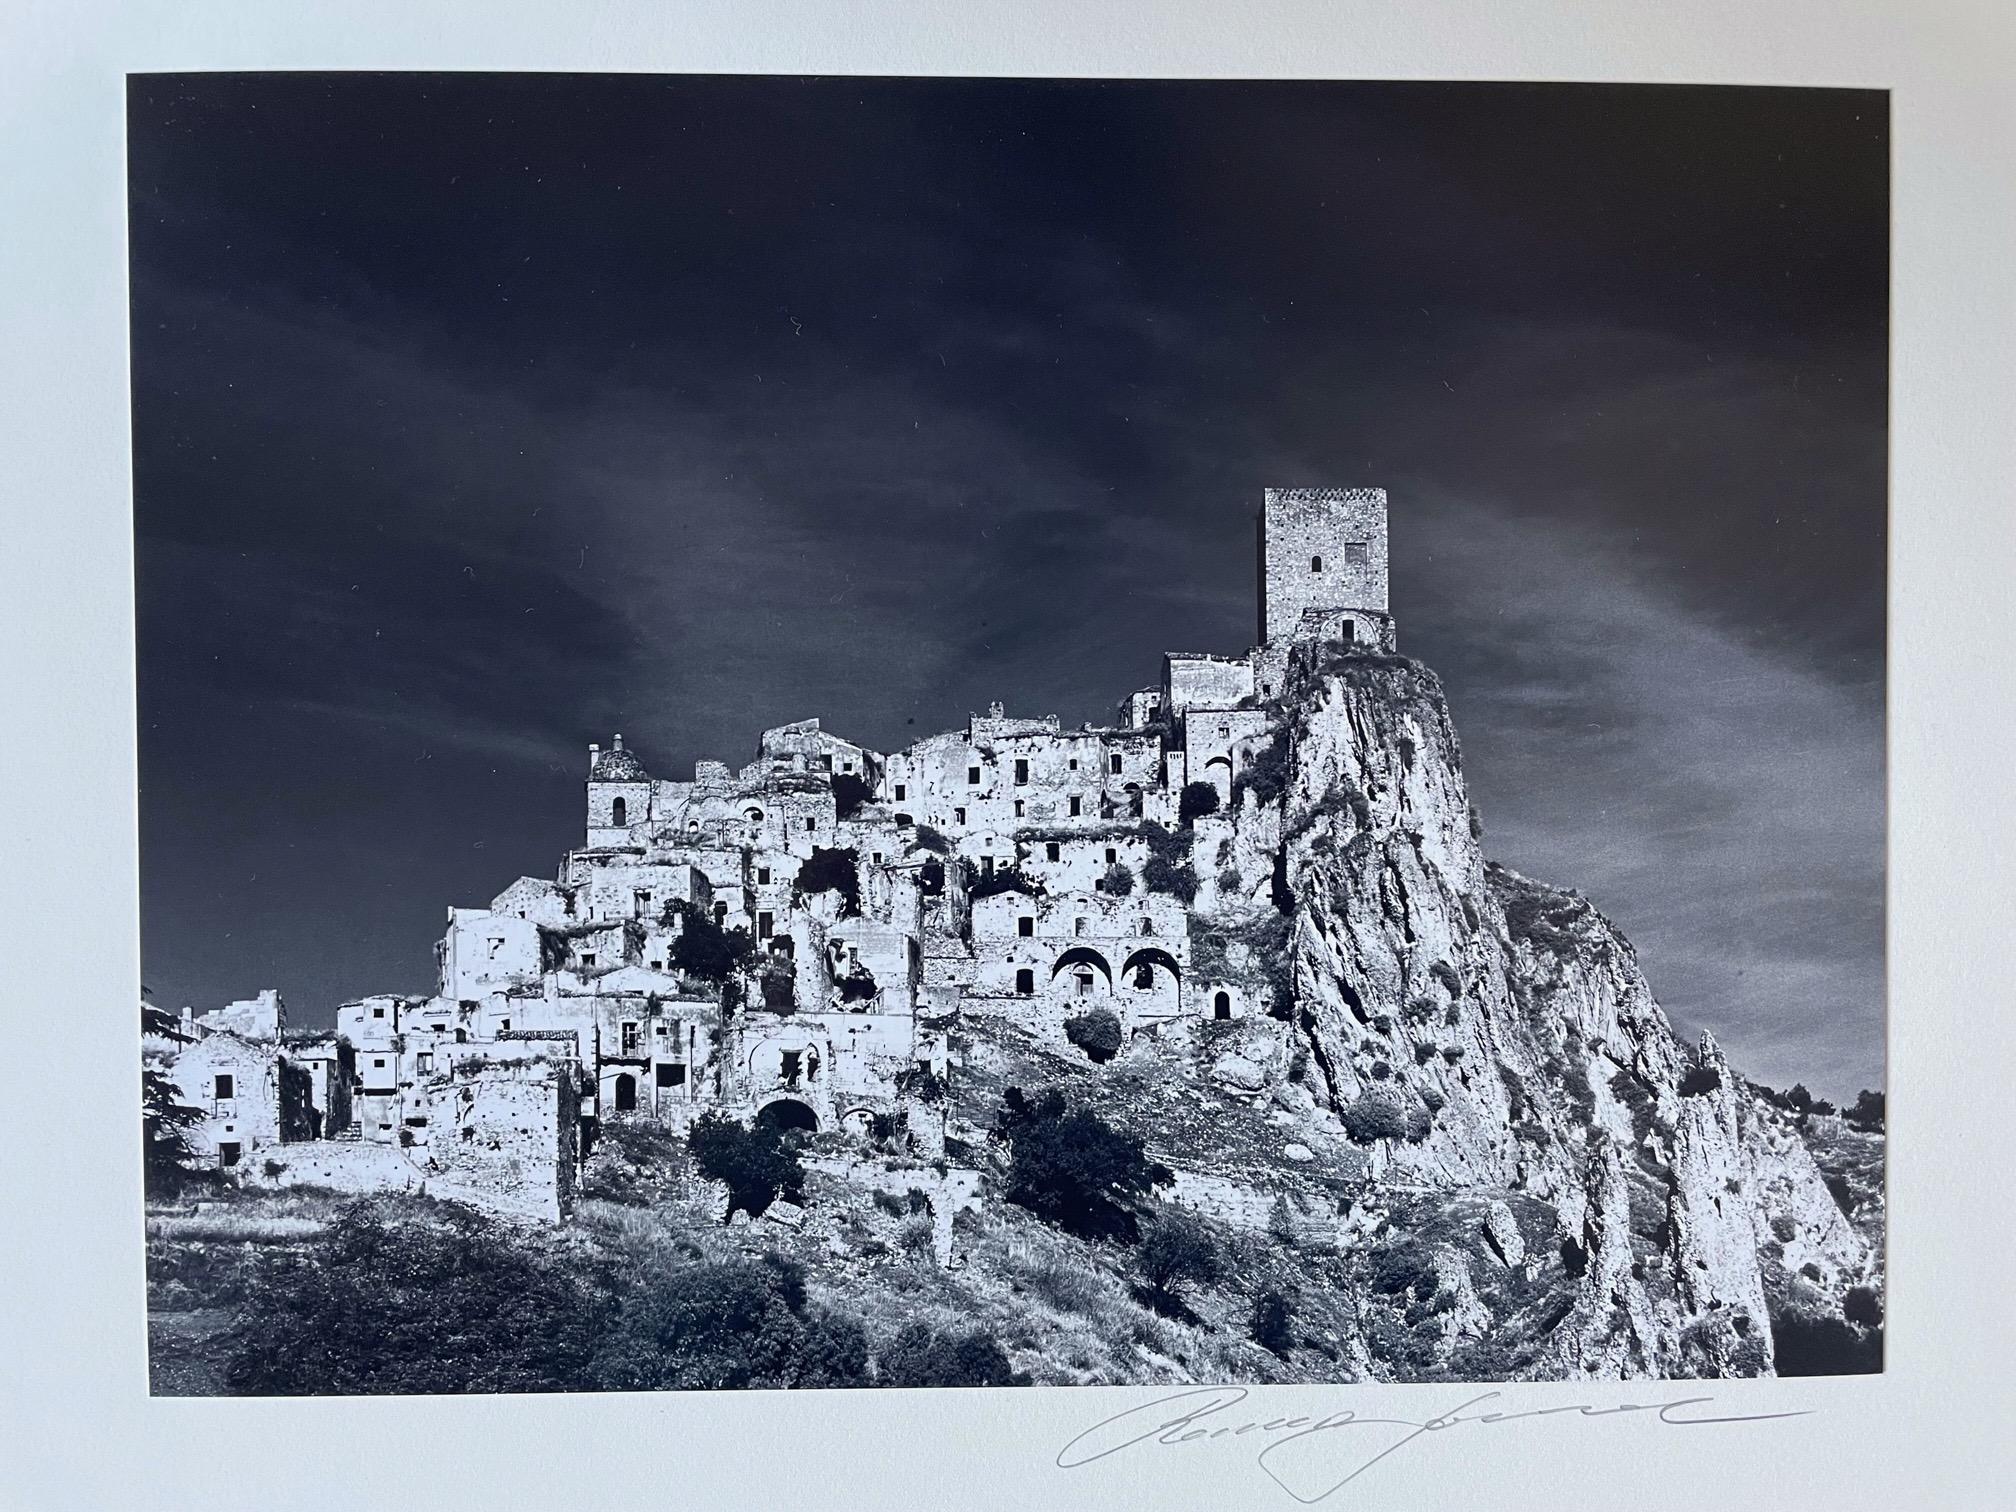 Roman Loranc Black and White Photograph - "Craco" Italy, Hand Printed Silver Gelatin Photograph